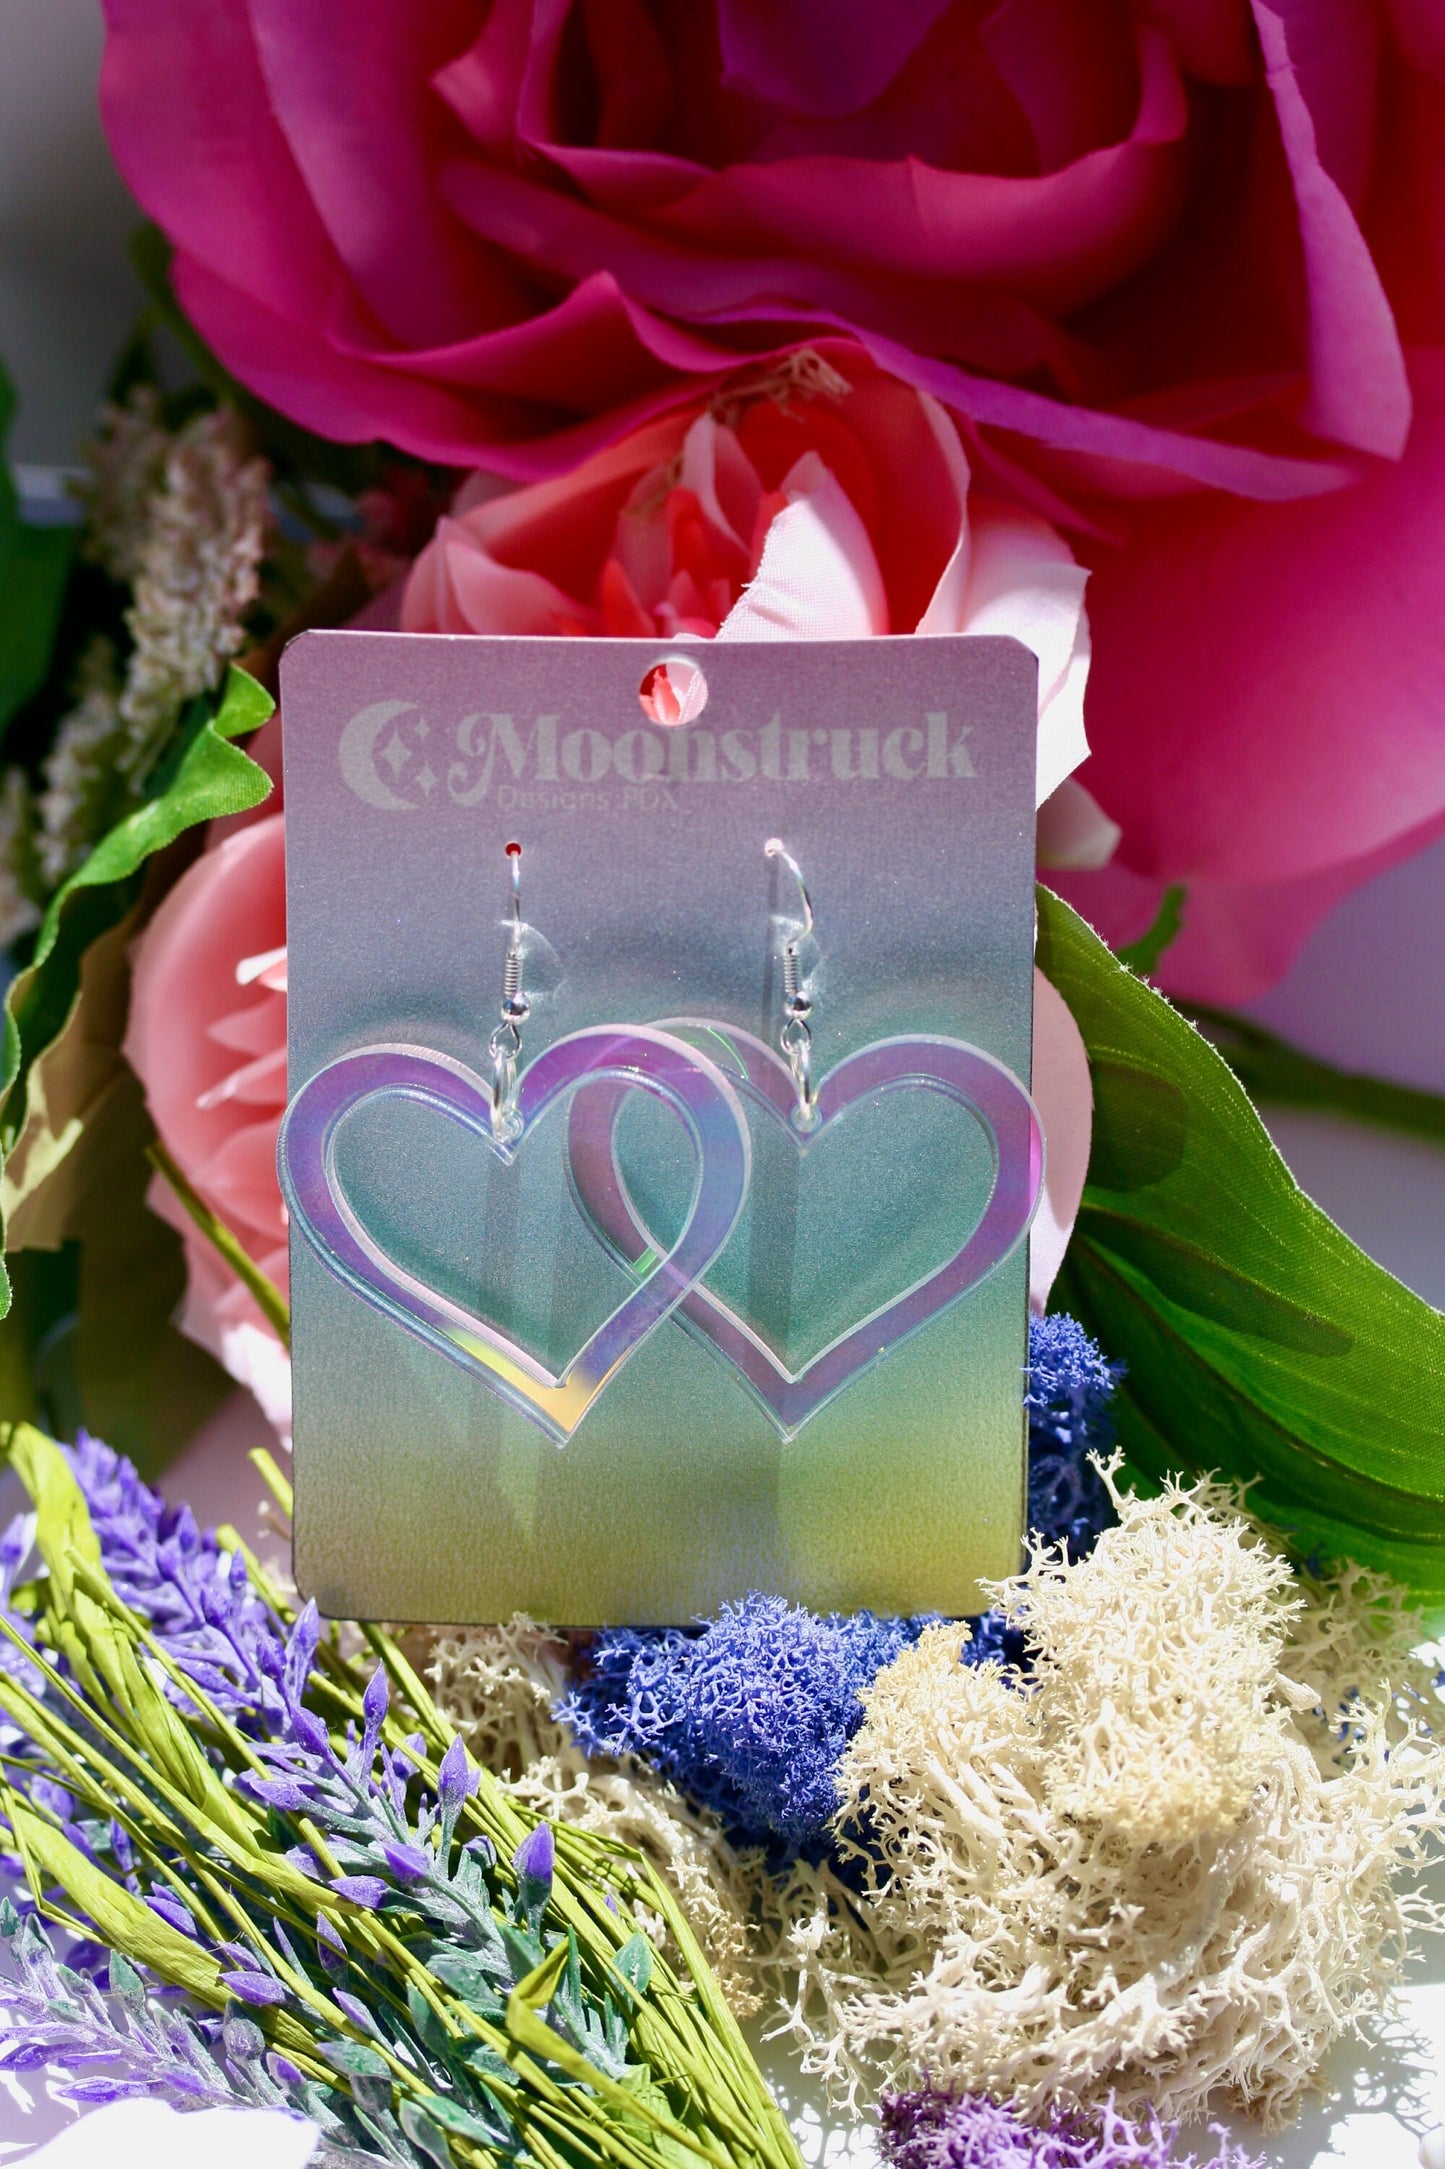 Heart Outline Earrings - Valentine Romantic Dreamy Cutout Emoji Lasercut Iridescent Reflective Rainbow Dangle Festival Rave Party Wear Holo